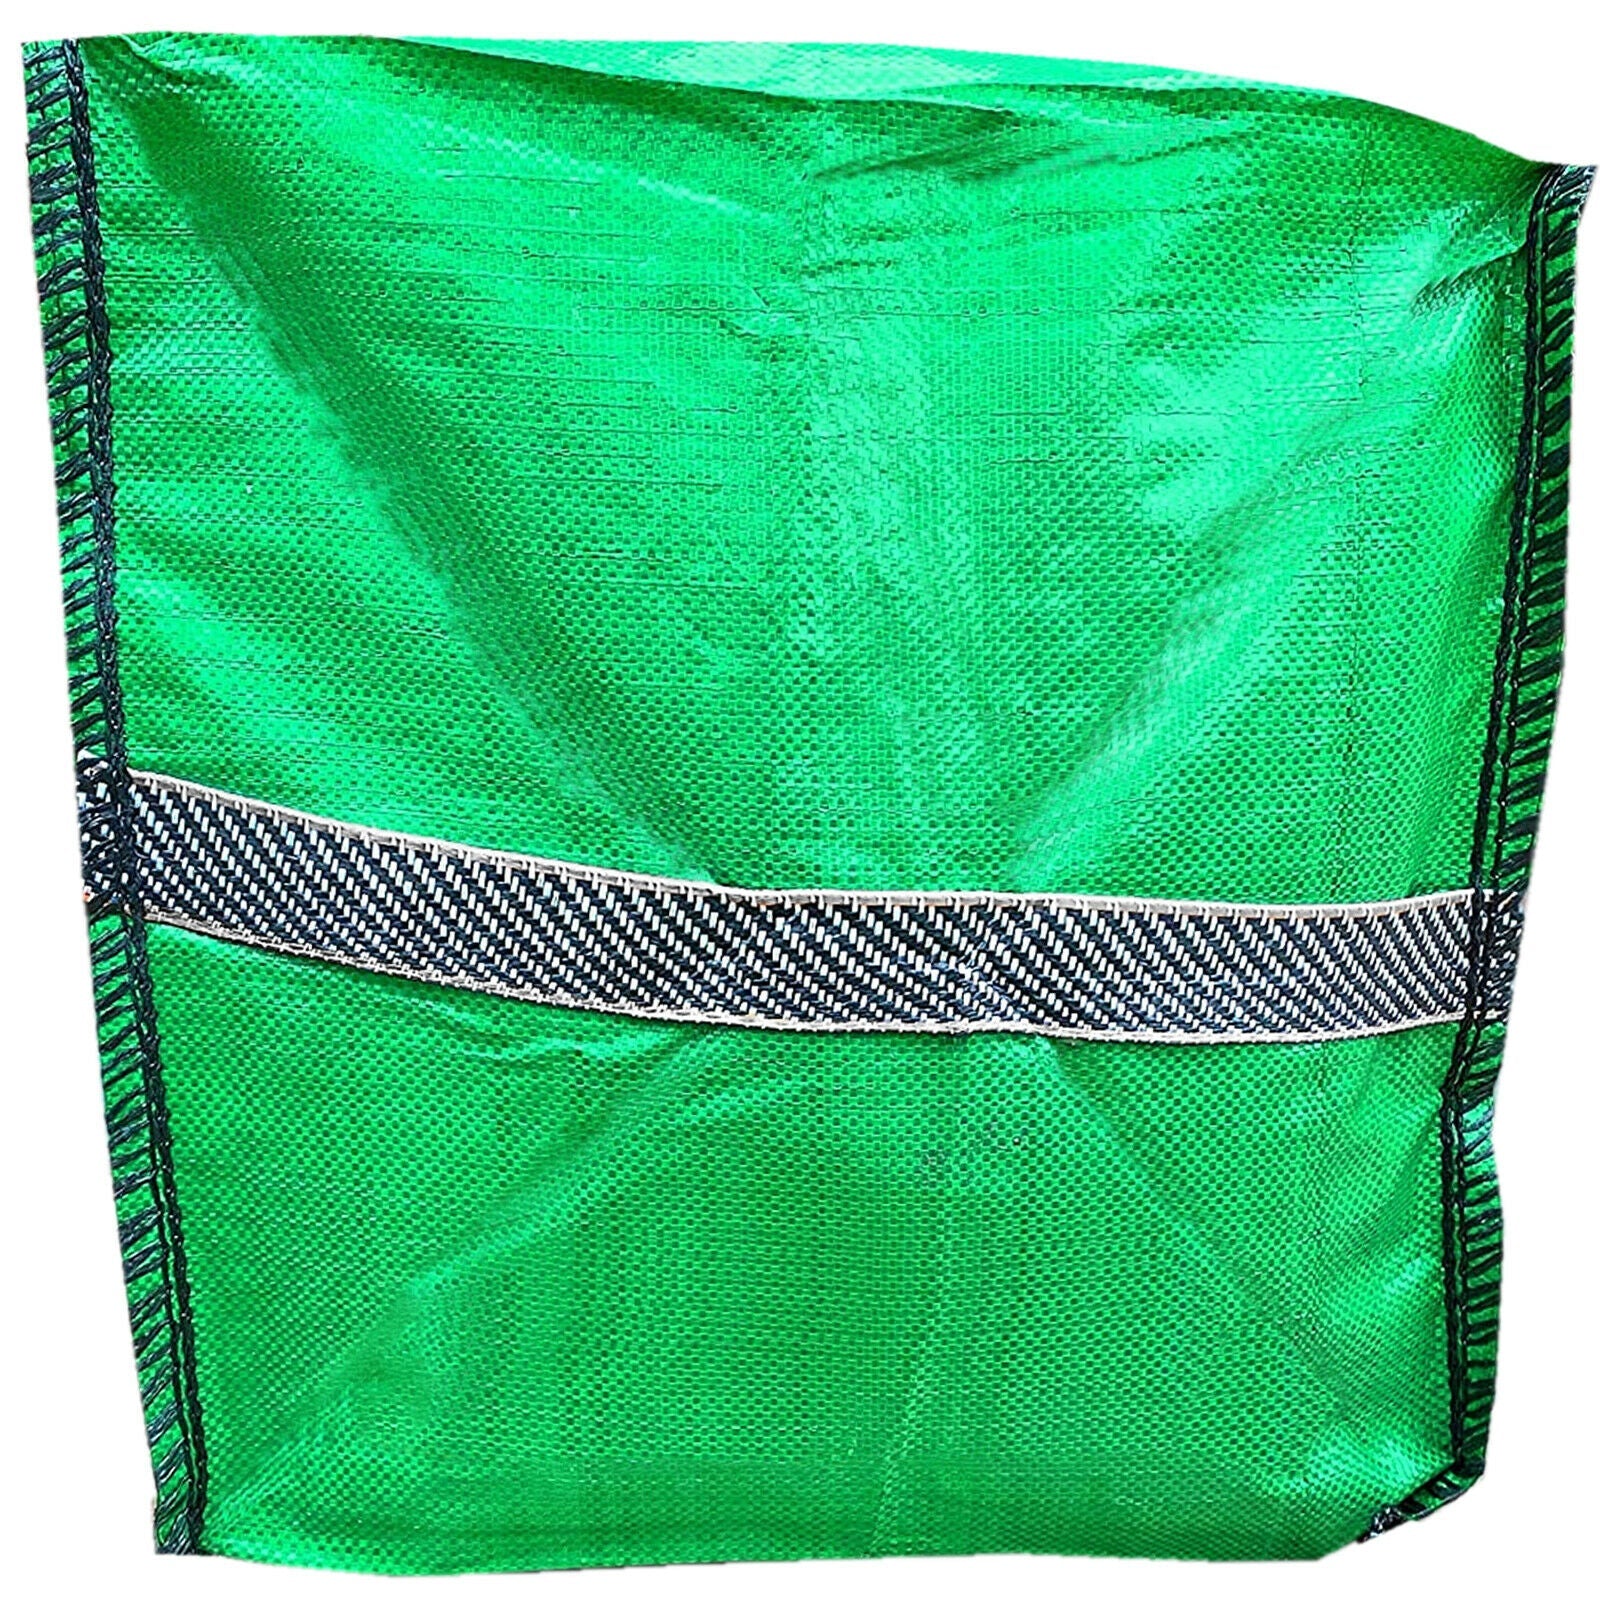 Garden Shredder Collection Bag Cover Waste Sack Reusable 120L 45 x 45 x 60 cm